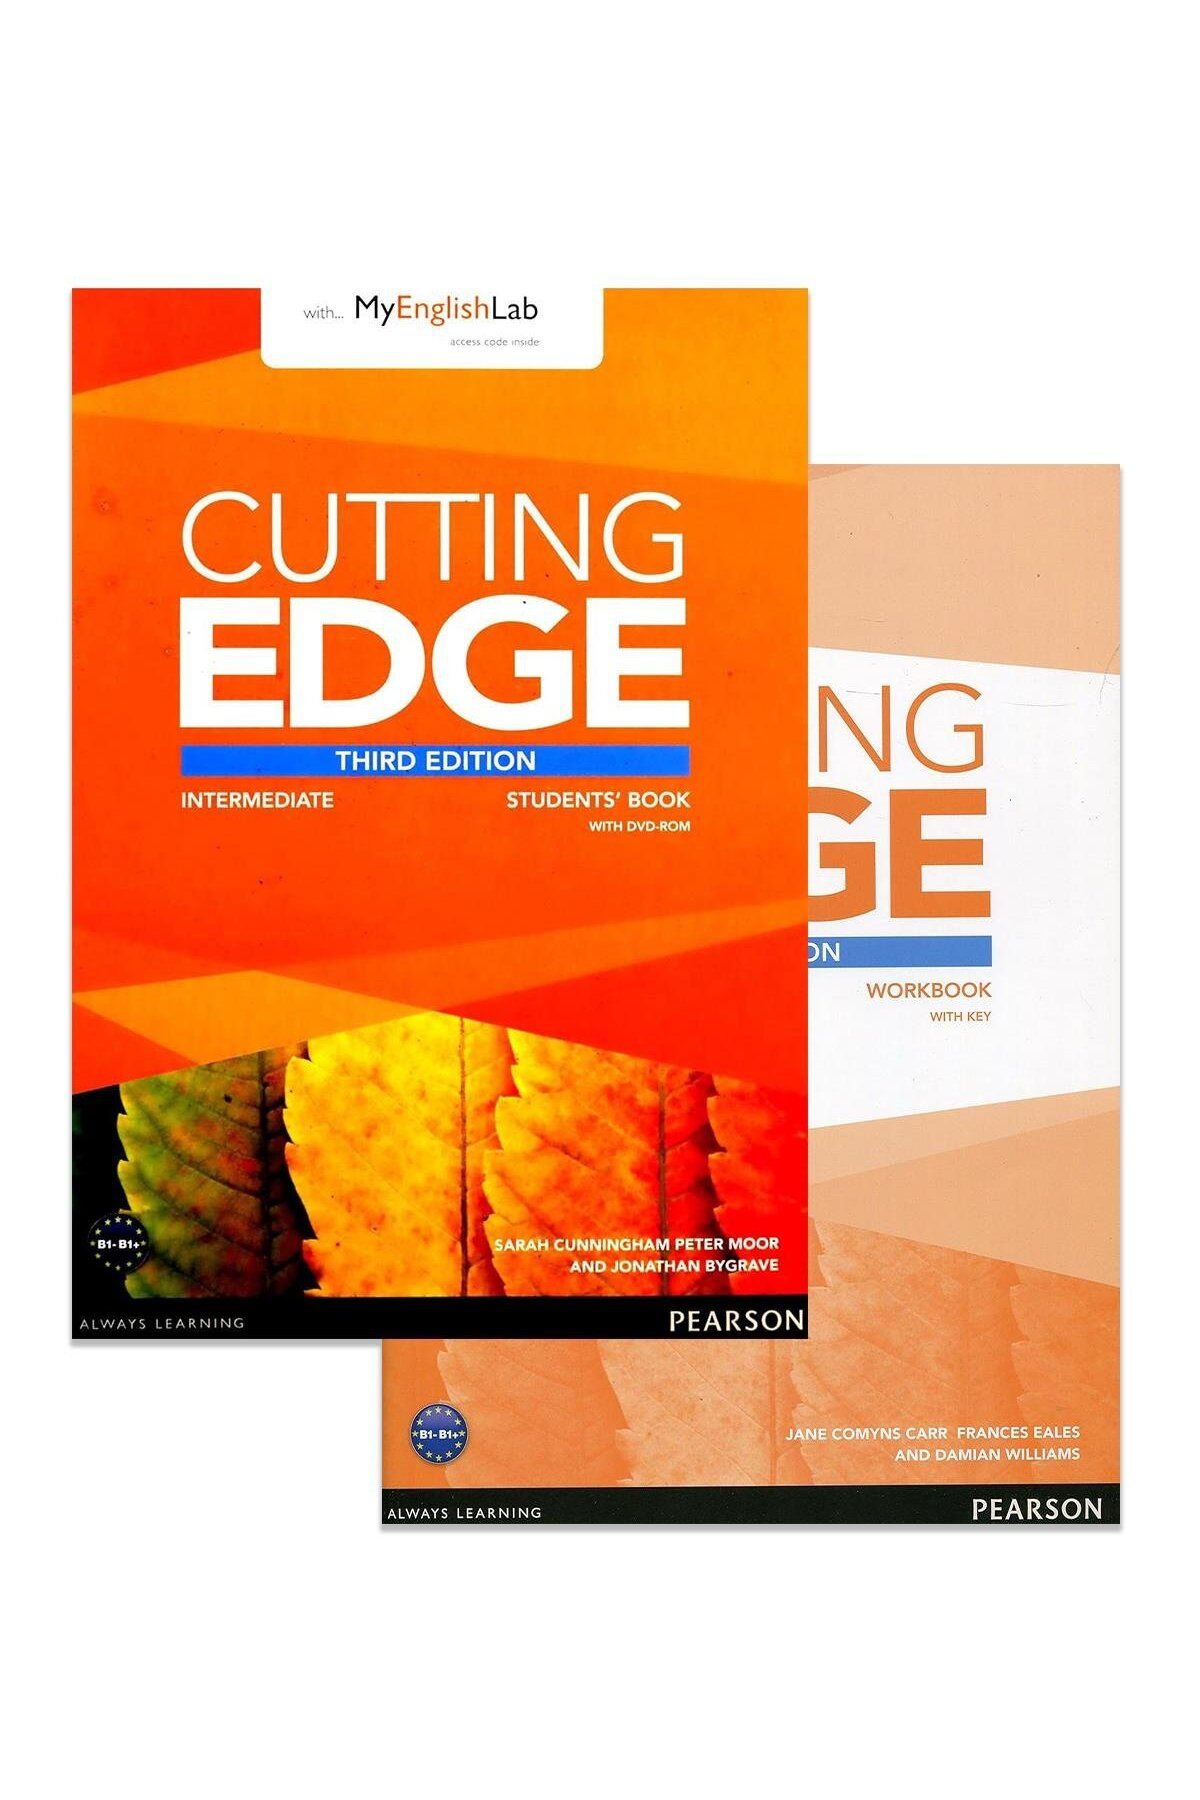 Pearson Cutting Edge Intermediate Students' Book + Workbook with DVD and MyEnglishLab